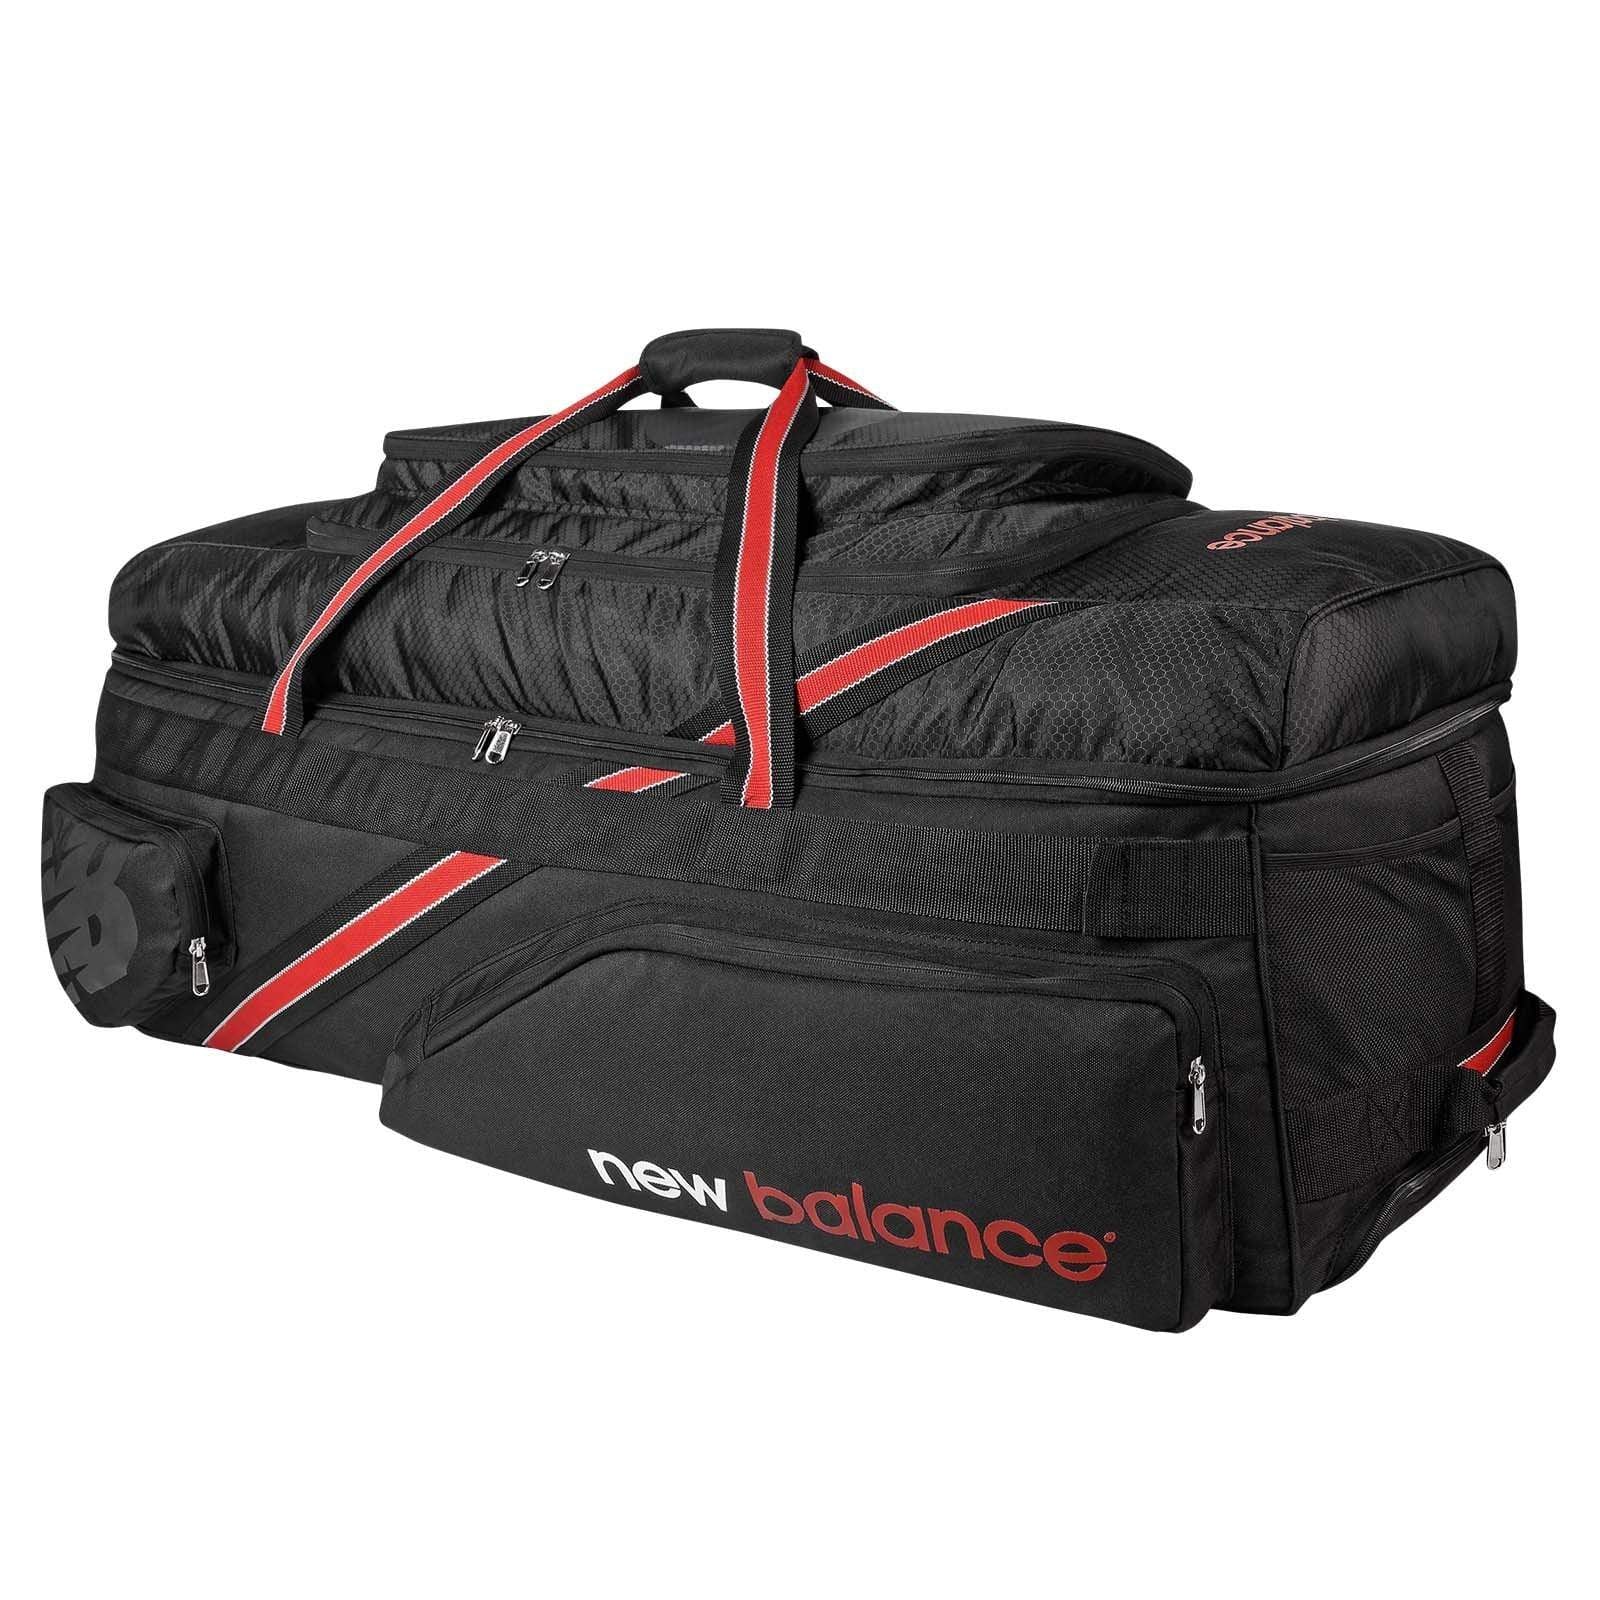 New Balance Cricket Bags New Balance TC860 Wheelie Cricket Kit Bag